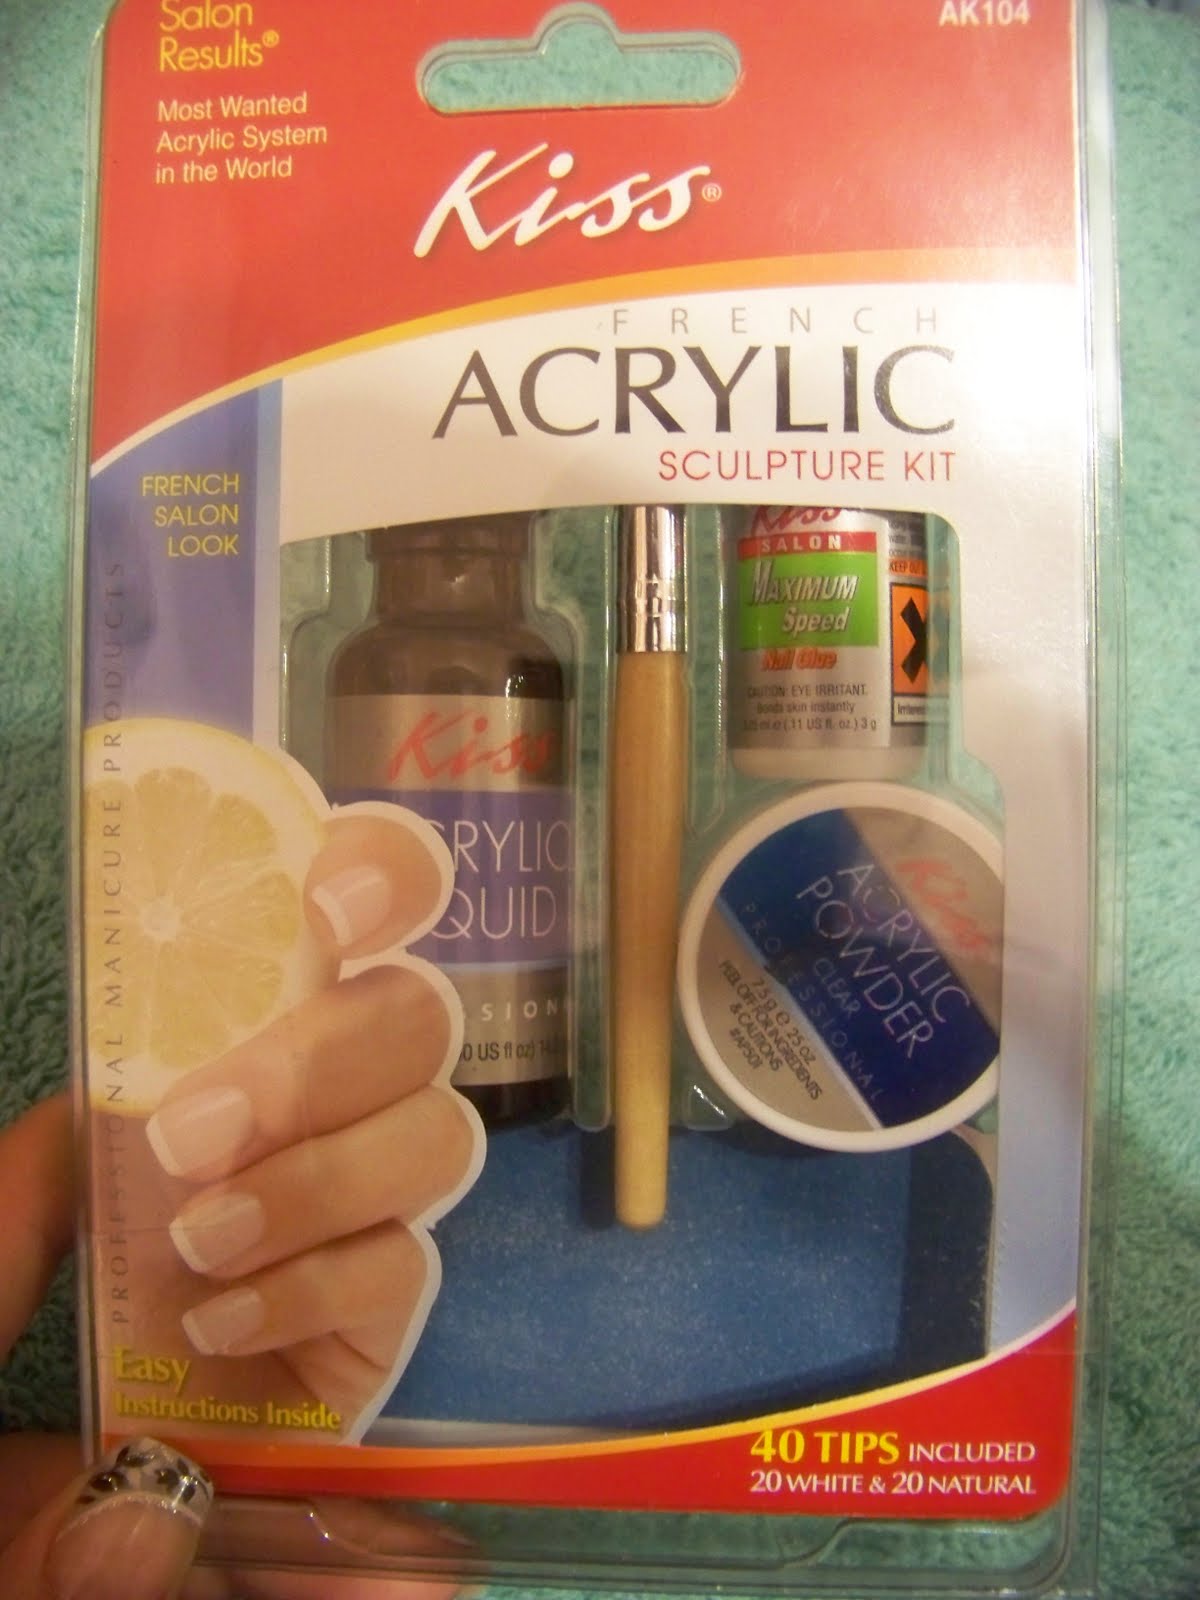 This kit comes with acrylic liquid, nail glue, acrylic powder,